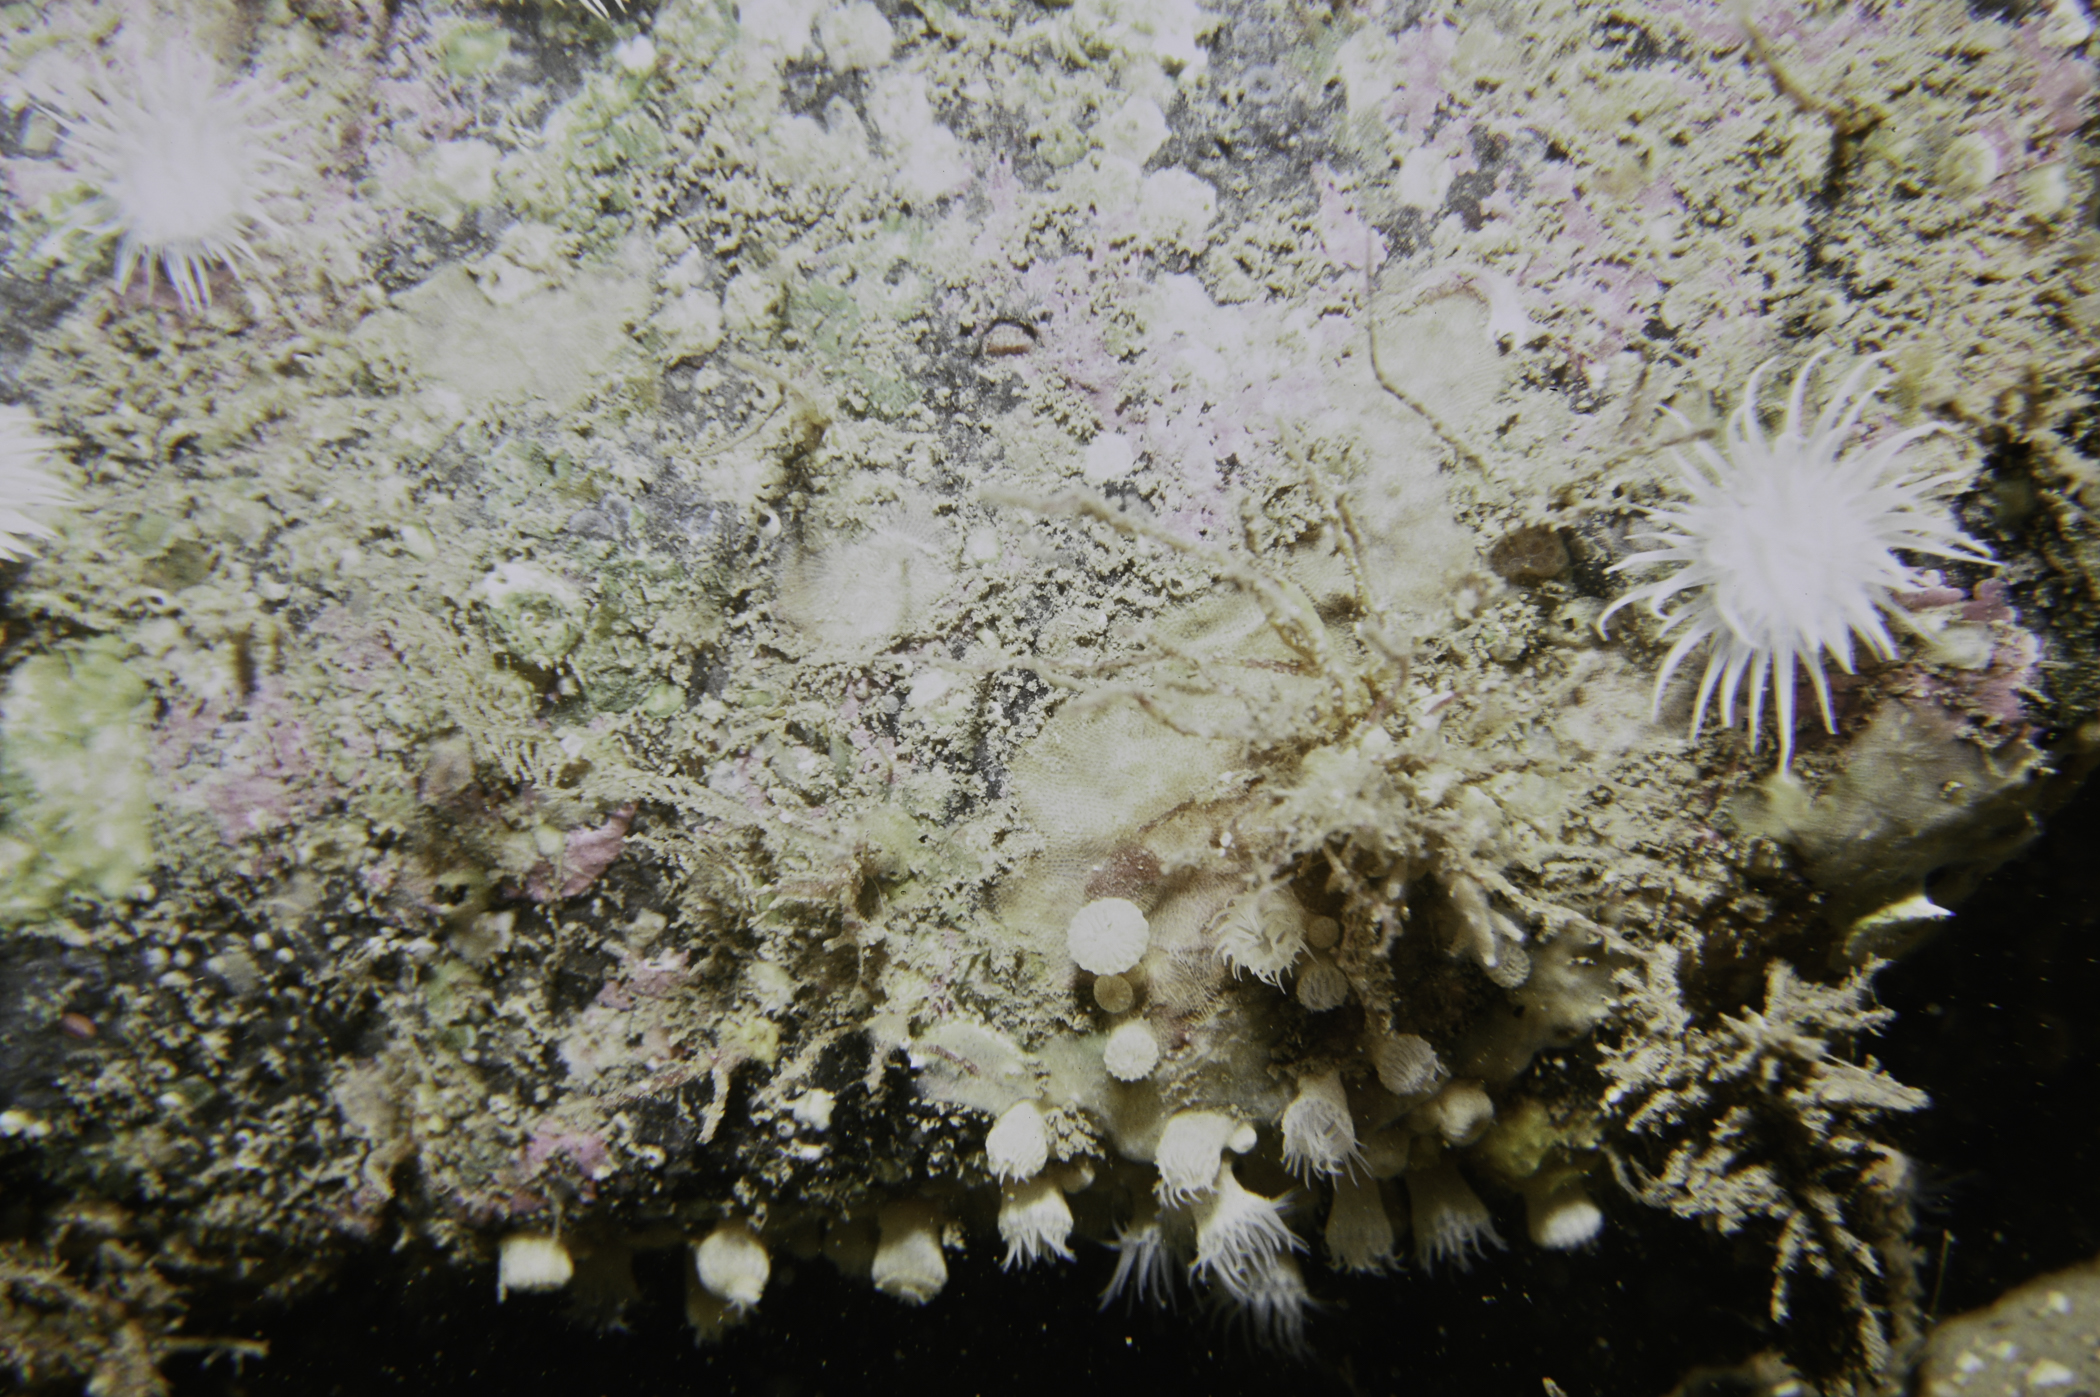 Parazoanthus anguicomus, Actinothoe sphyrodeta. Site: S Bull Point, Rathlin Island. 